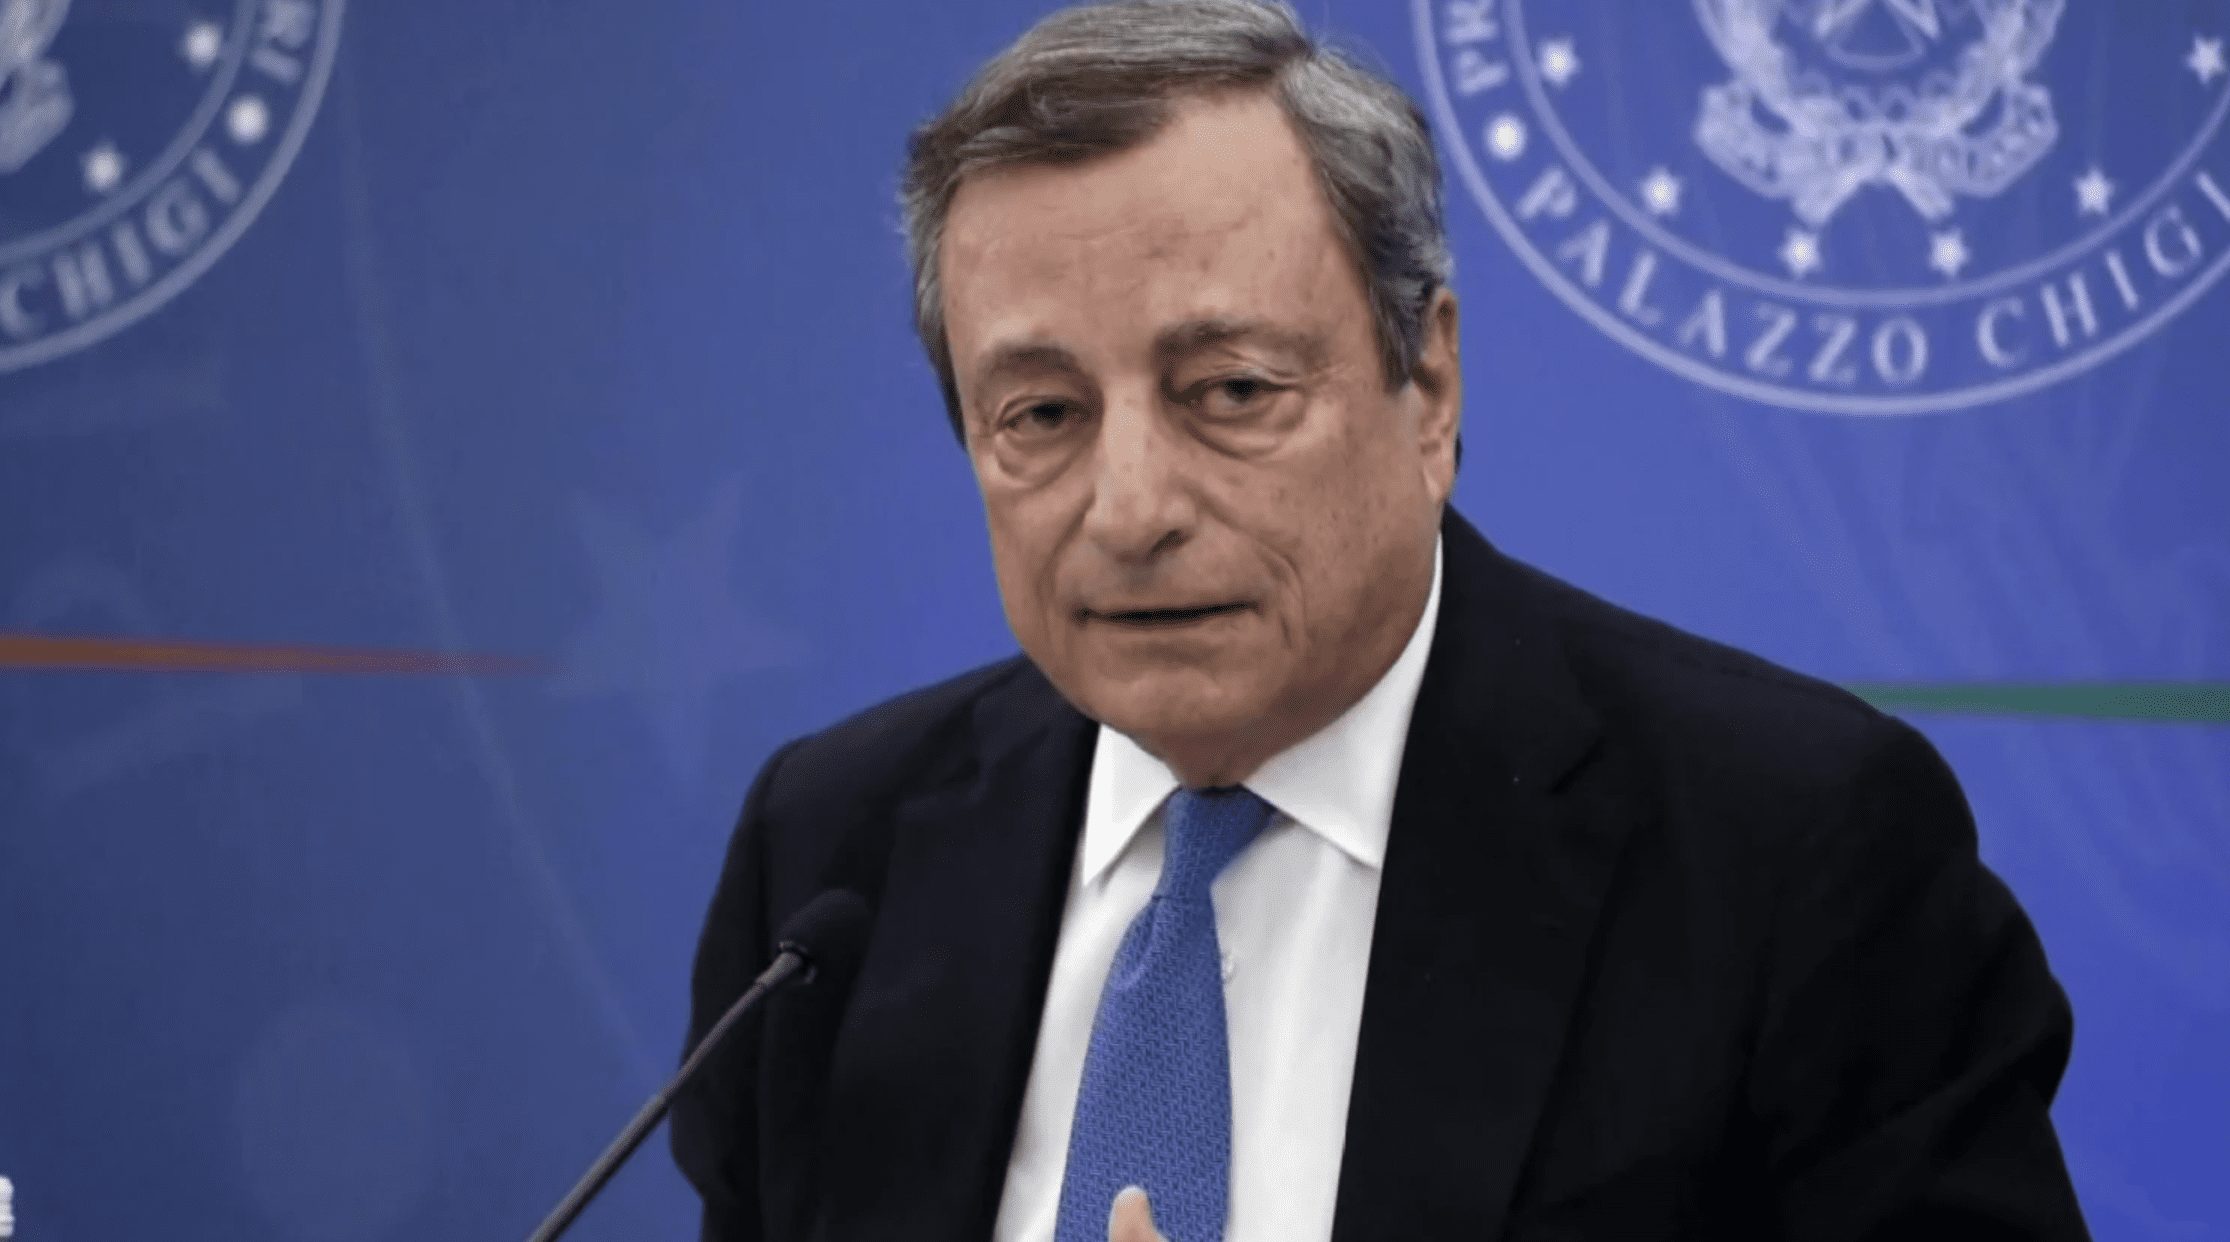 Italian PM Mario Draghi Announces Resignation as Coalition Crumbles